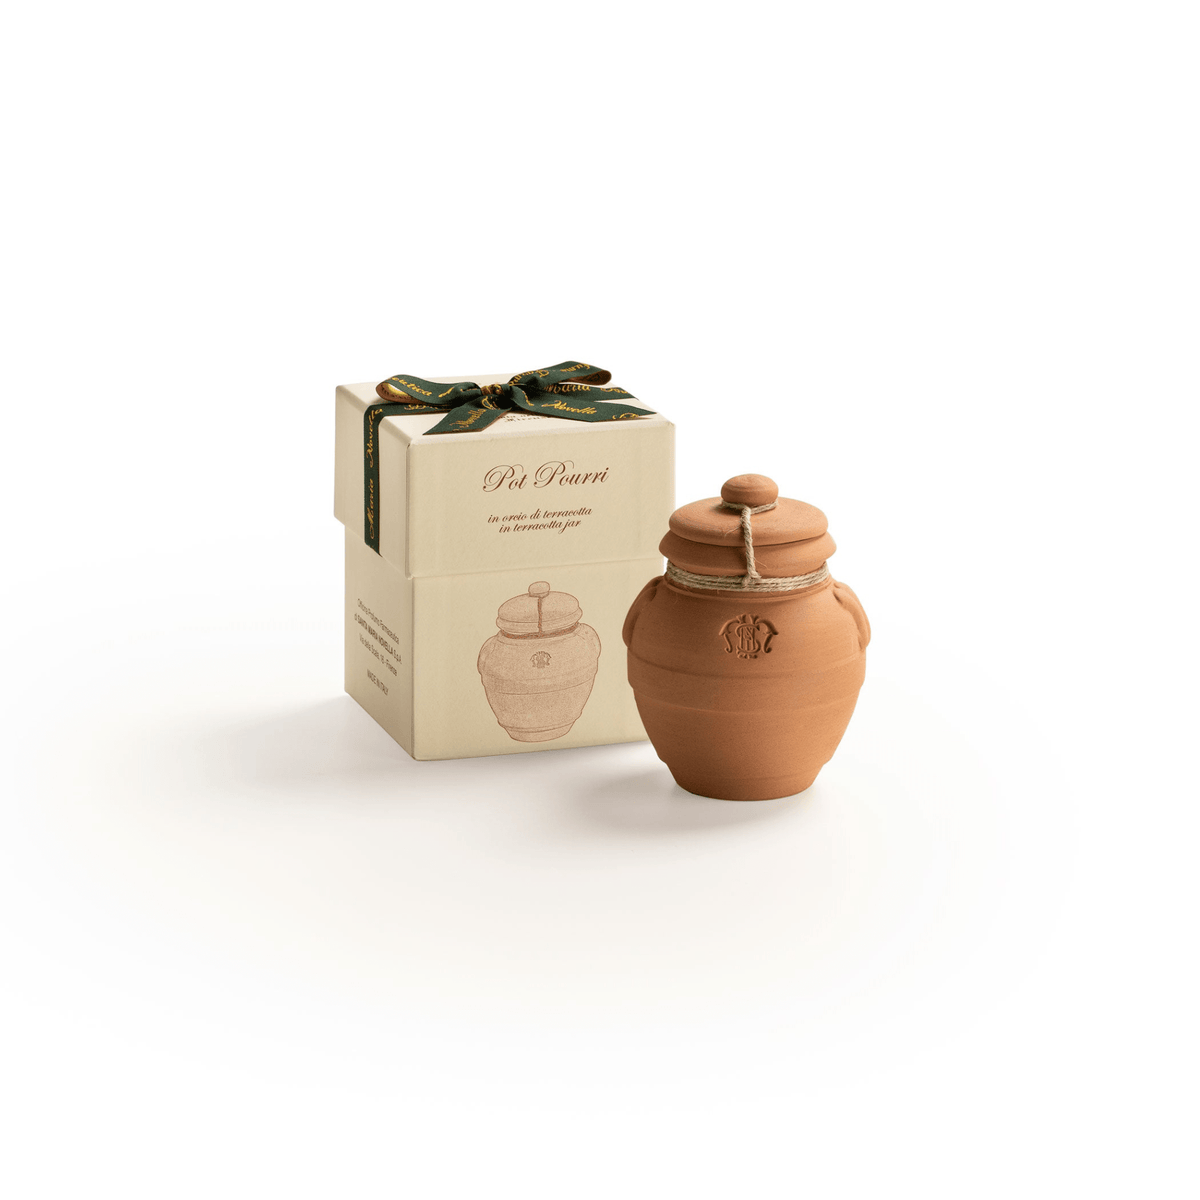 Primary Image of Pot Pourri in Terracotta Jar (Small)